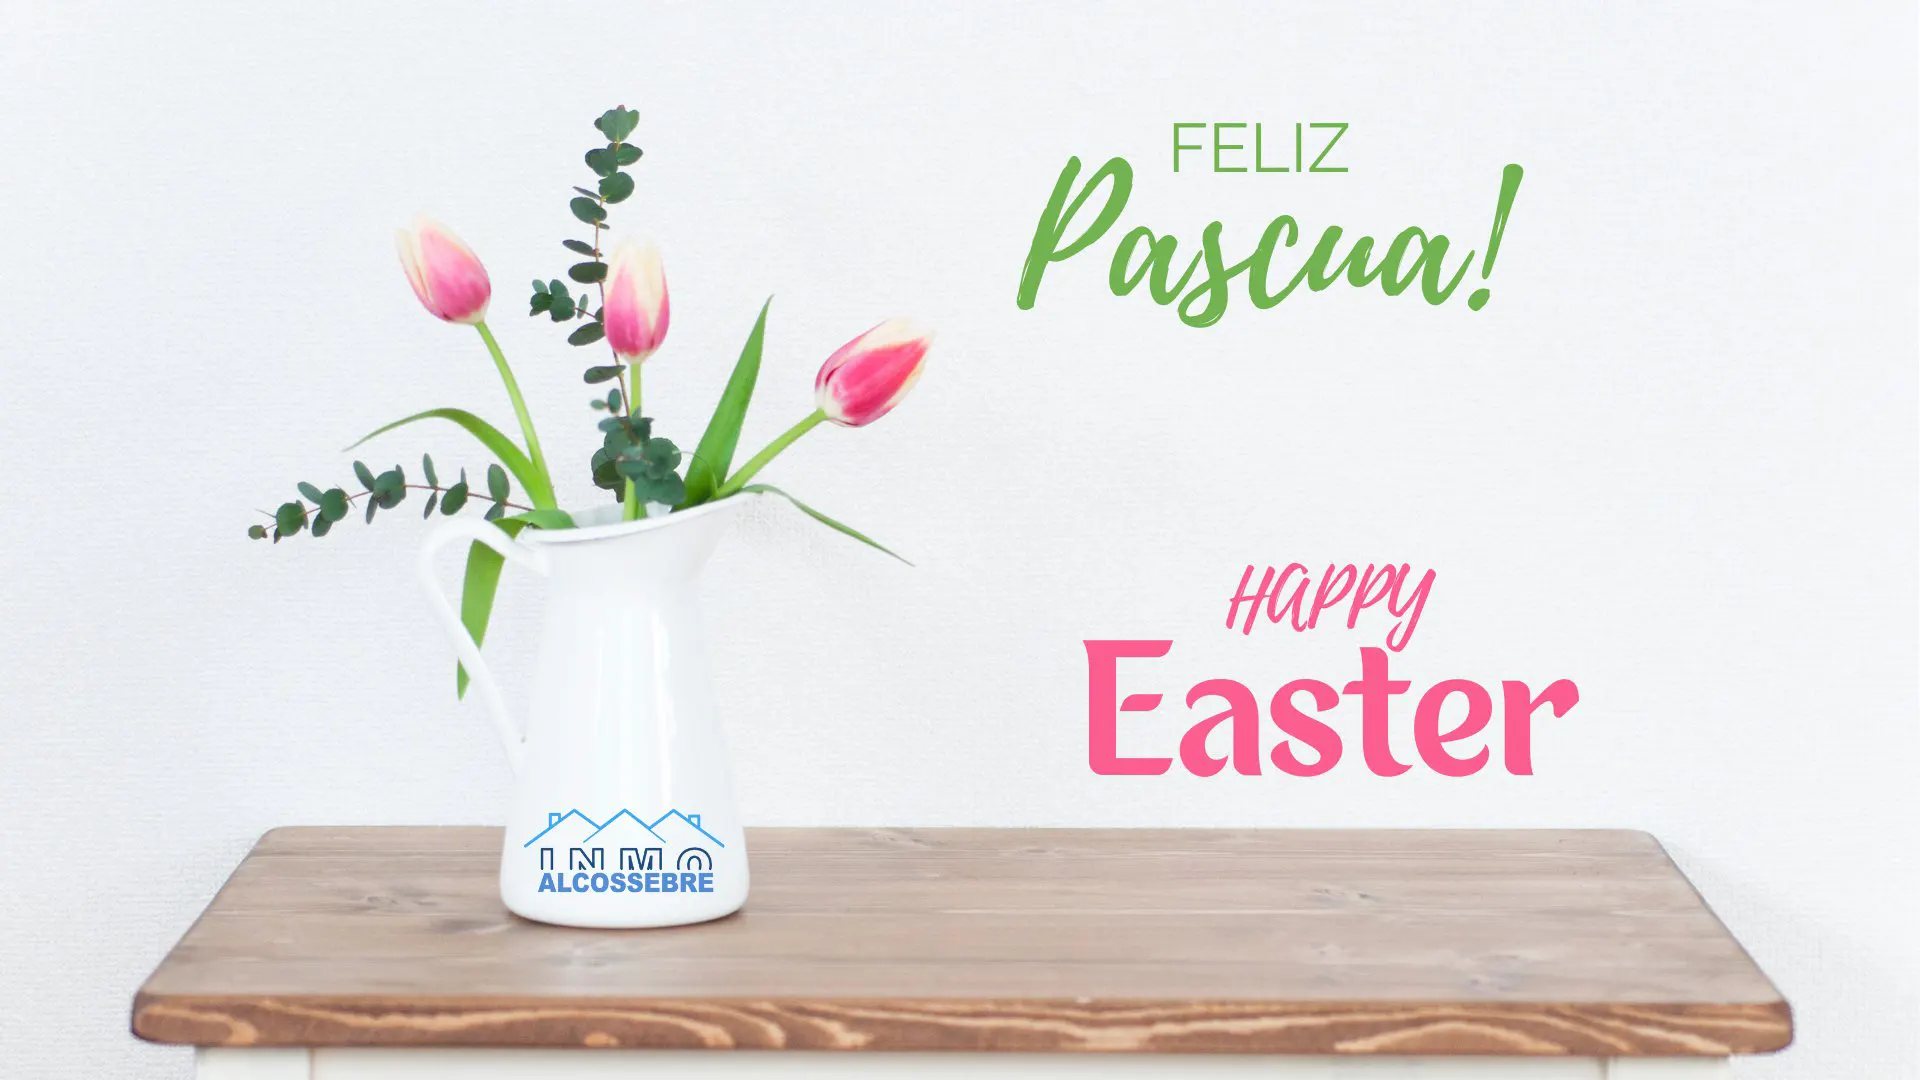 Feliz Pascua! Happy Easter!